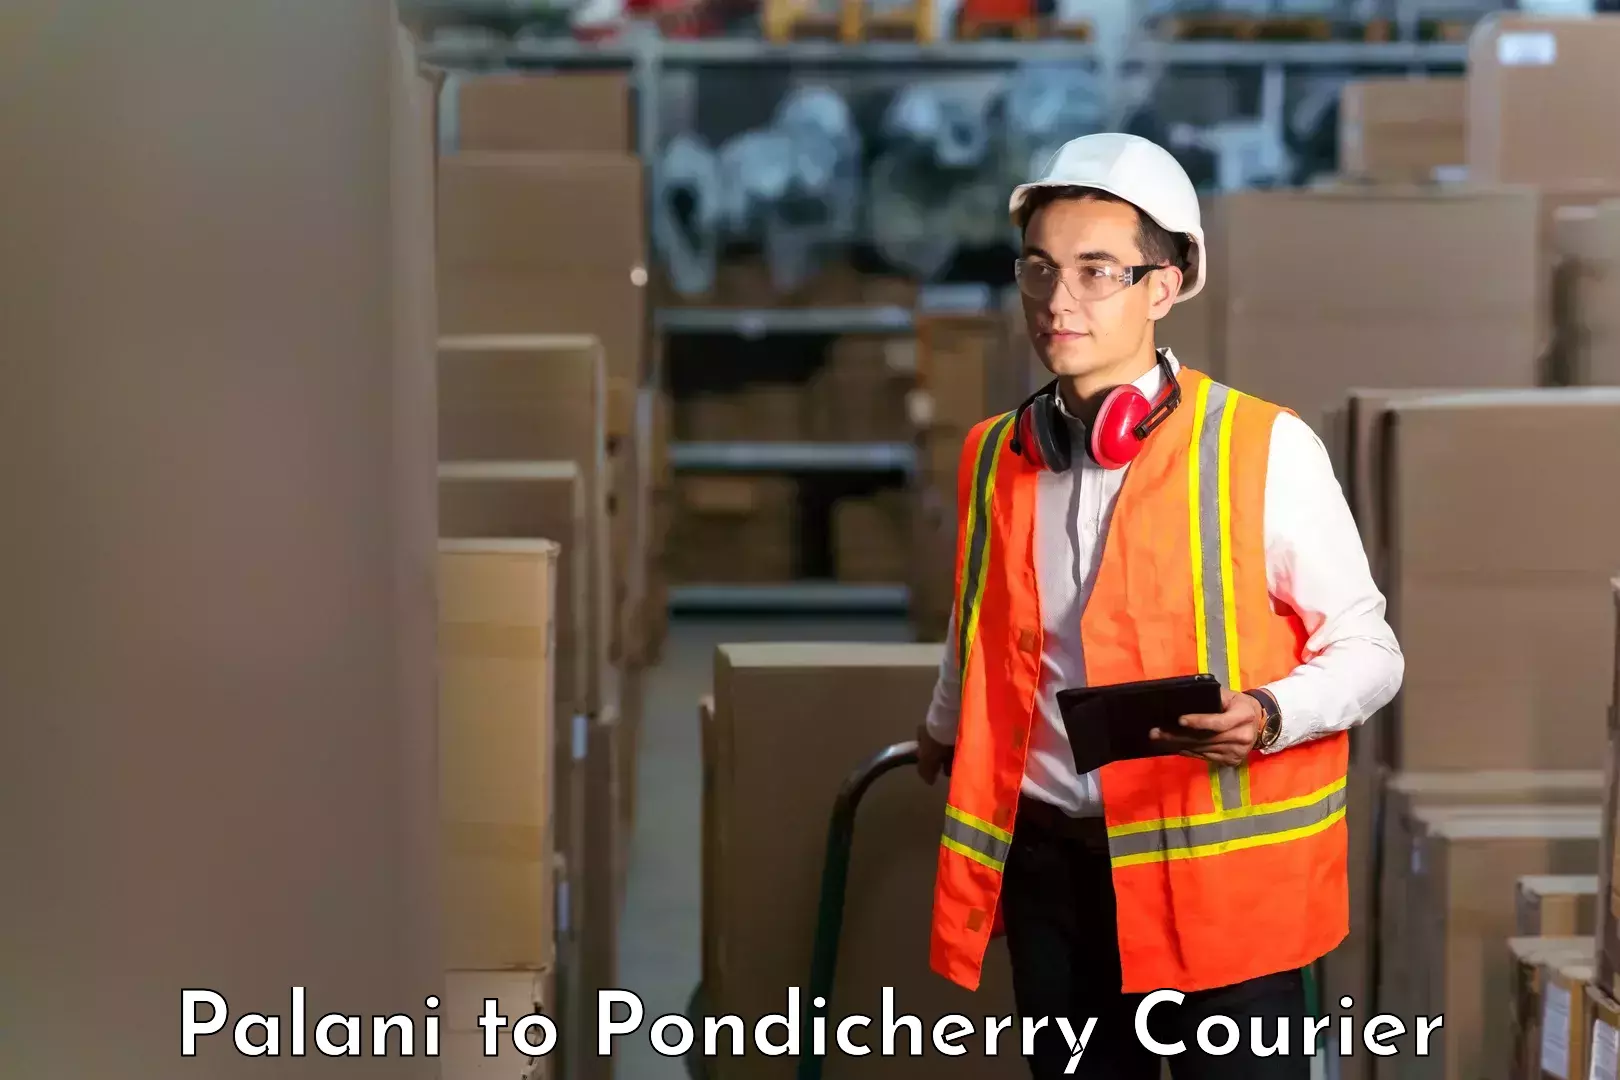 Professional courier handling Palani to Pondicherry University